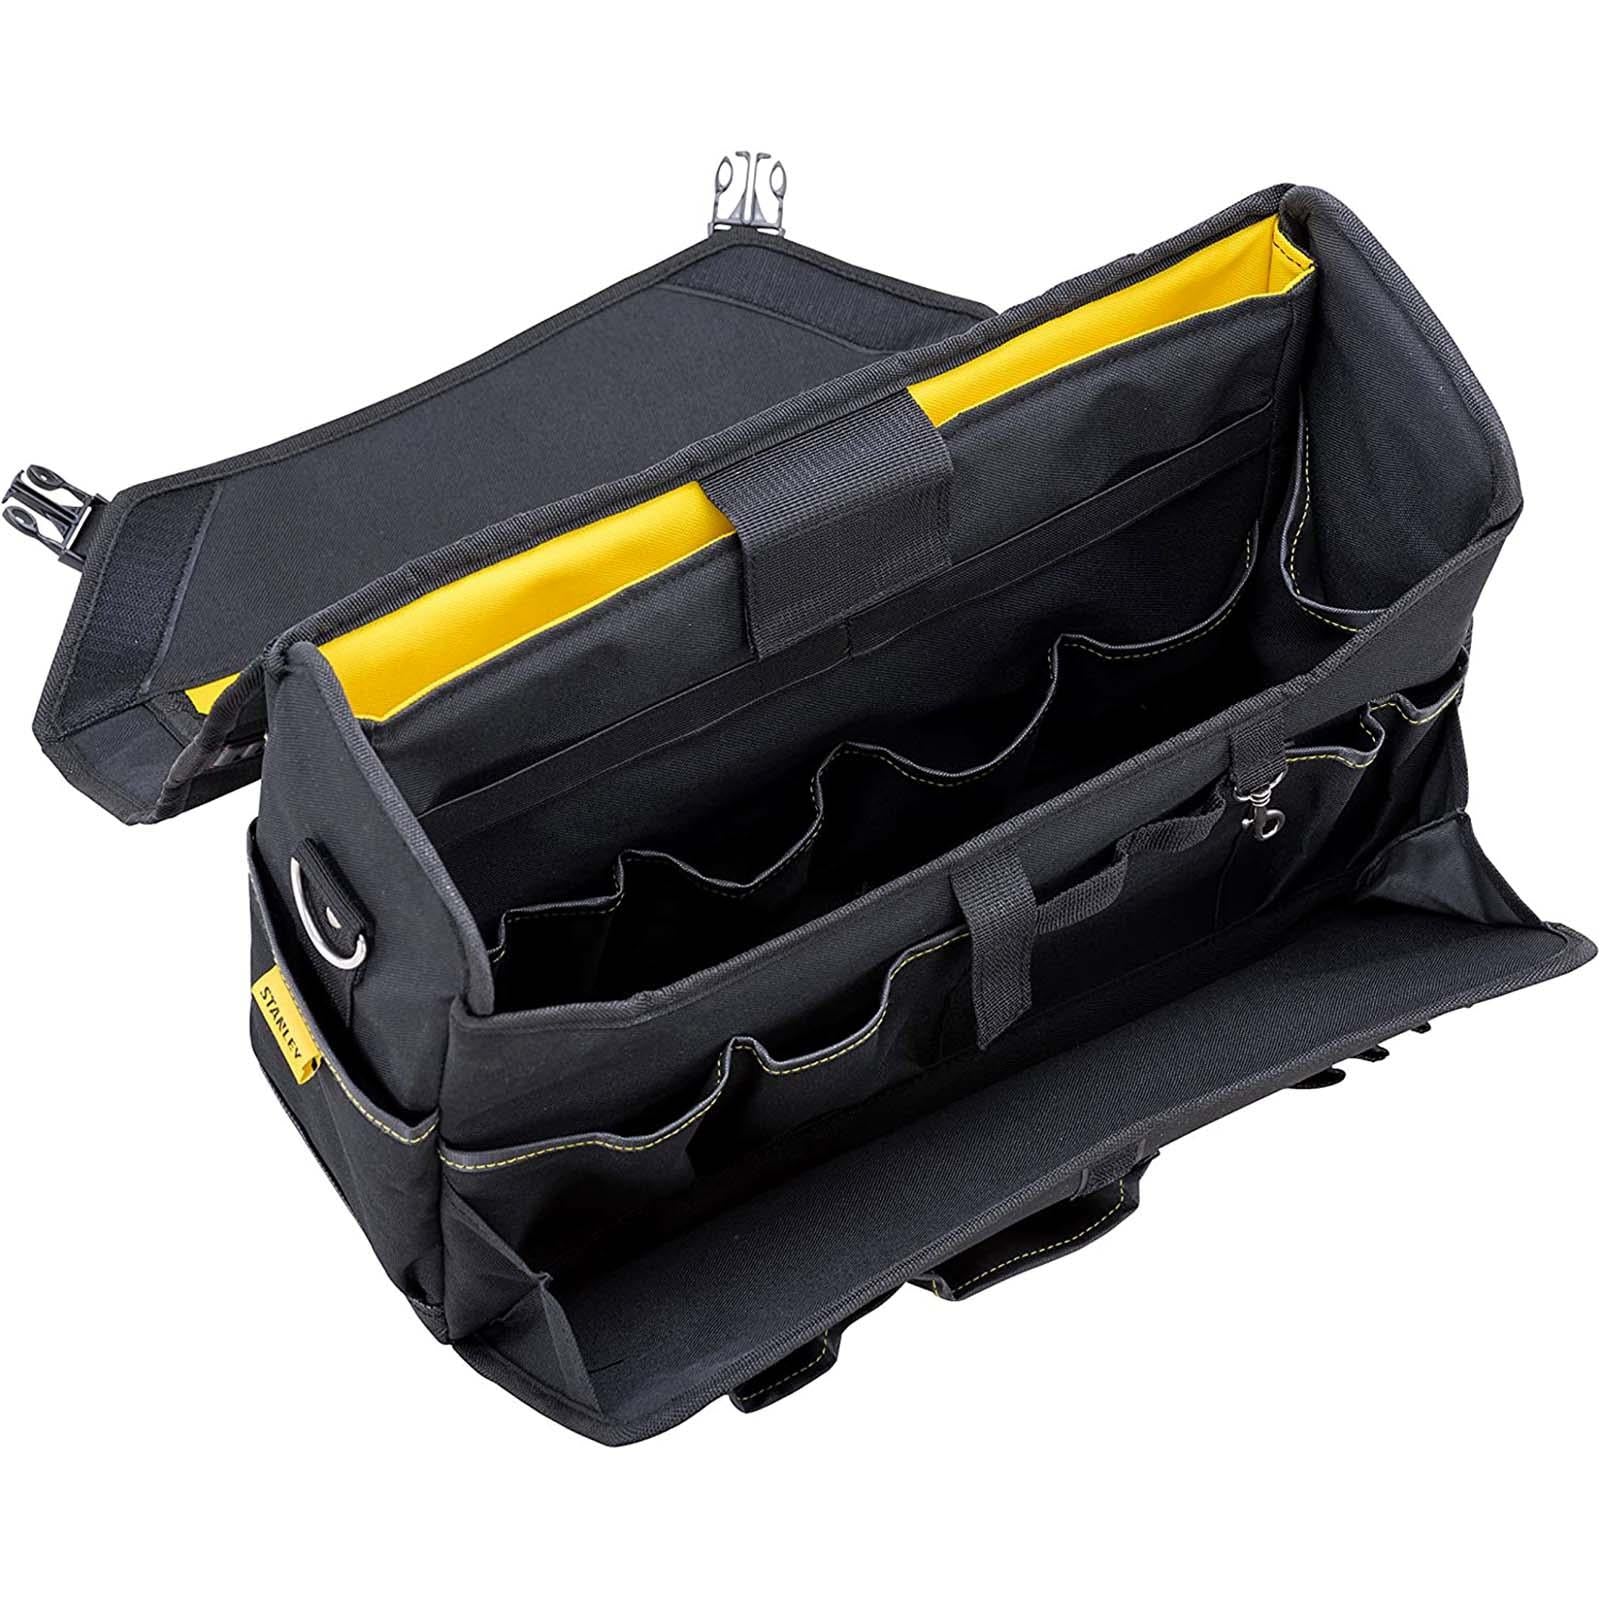 Stanley FatMax Laptop Bag Case Storage Travel Site Water Resistant Bottom Carry Handle Shoulder Strap